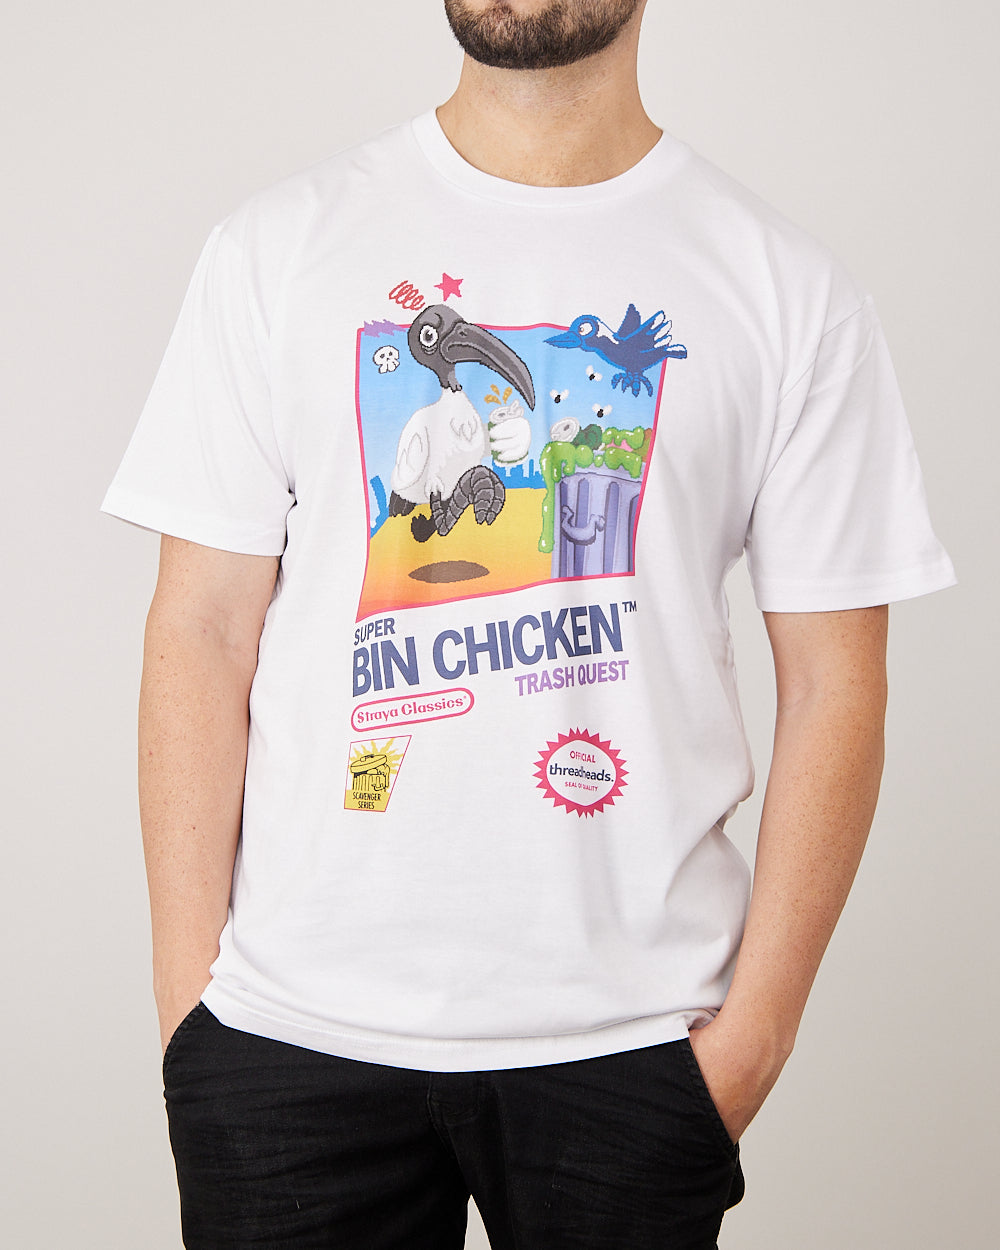 Super Bin Chicken T-Shirt